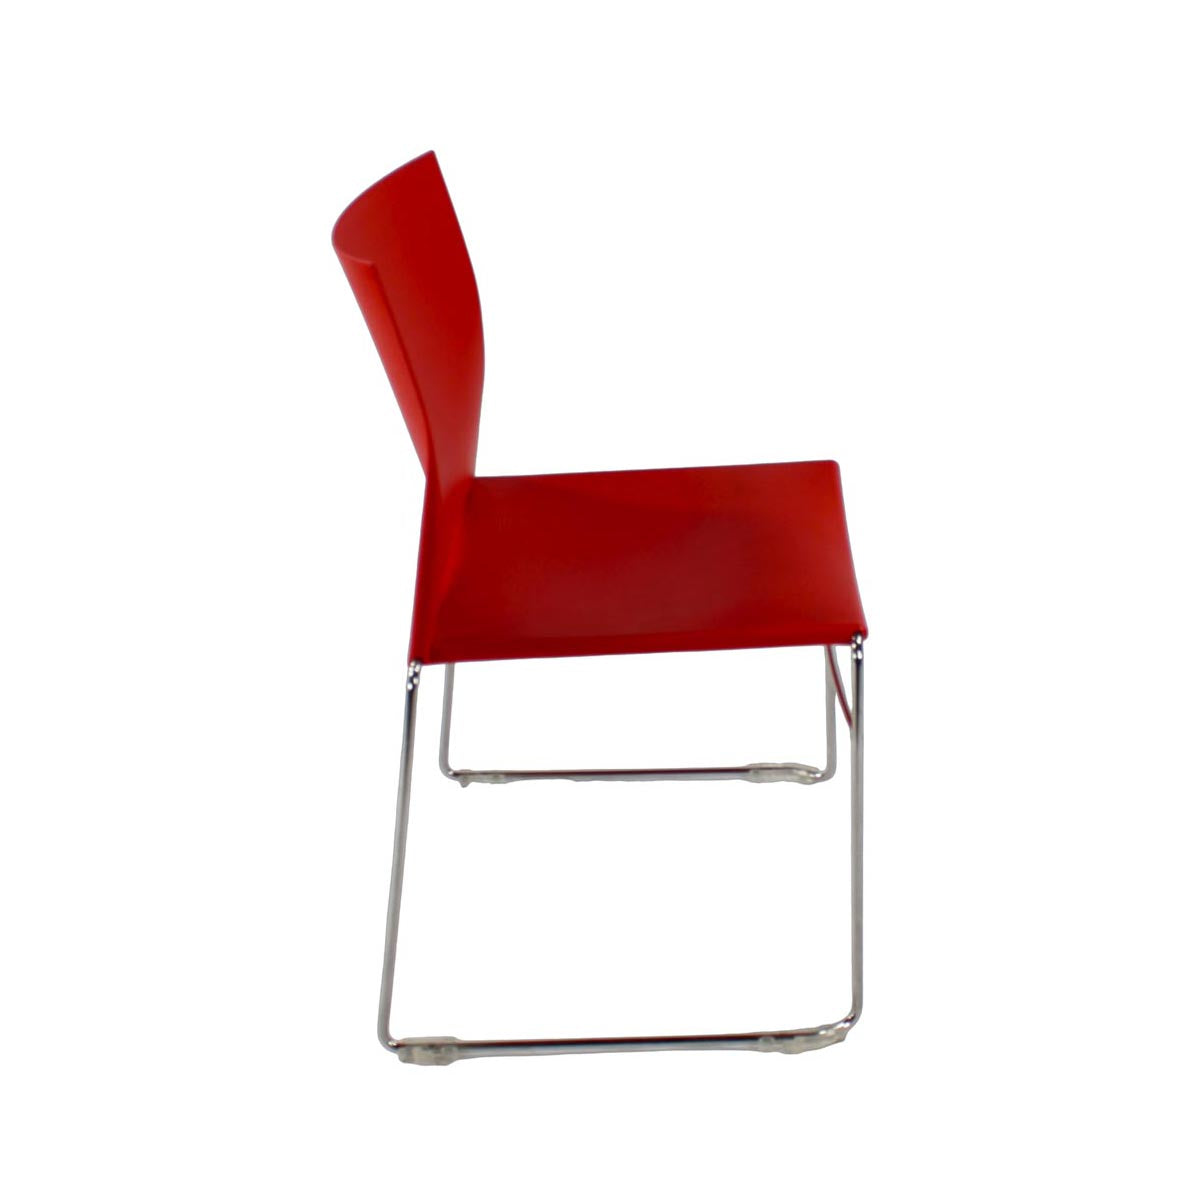 Herman Miller : Chaise empilable Pronta en rouge - Remis à neuf